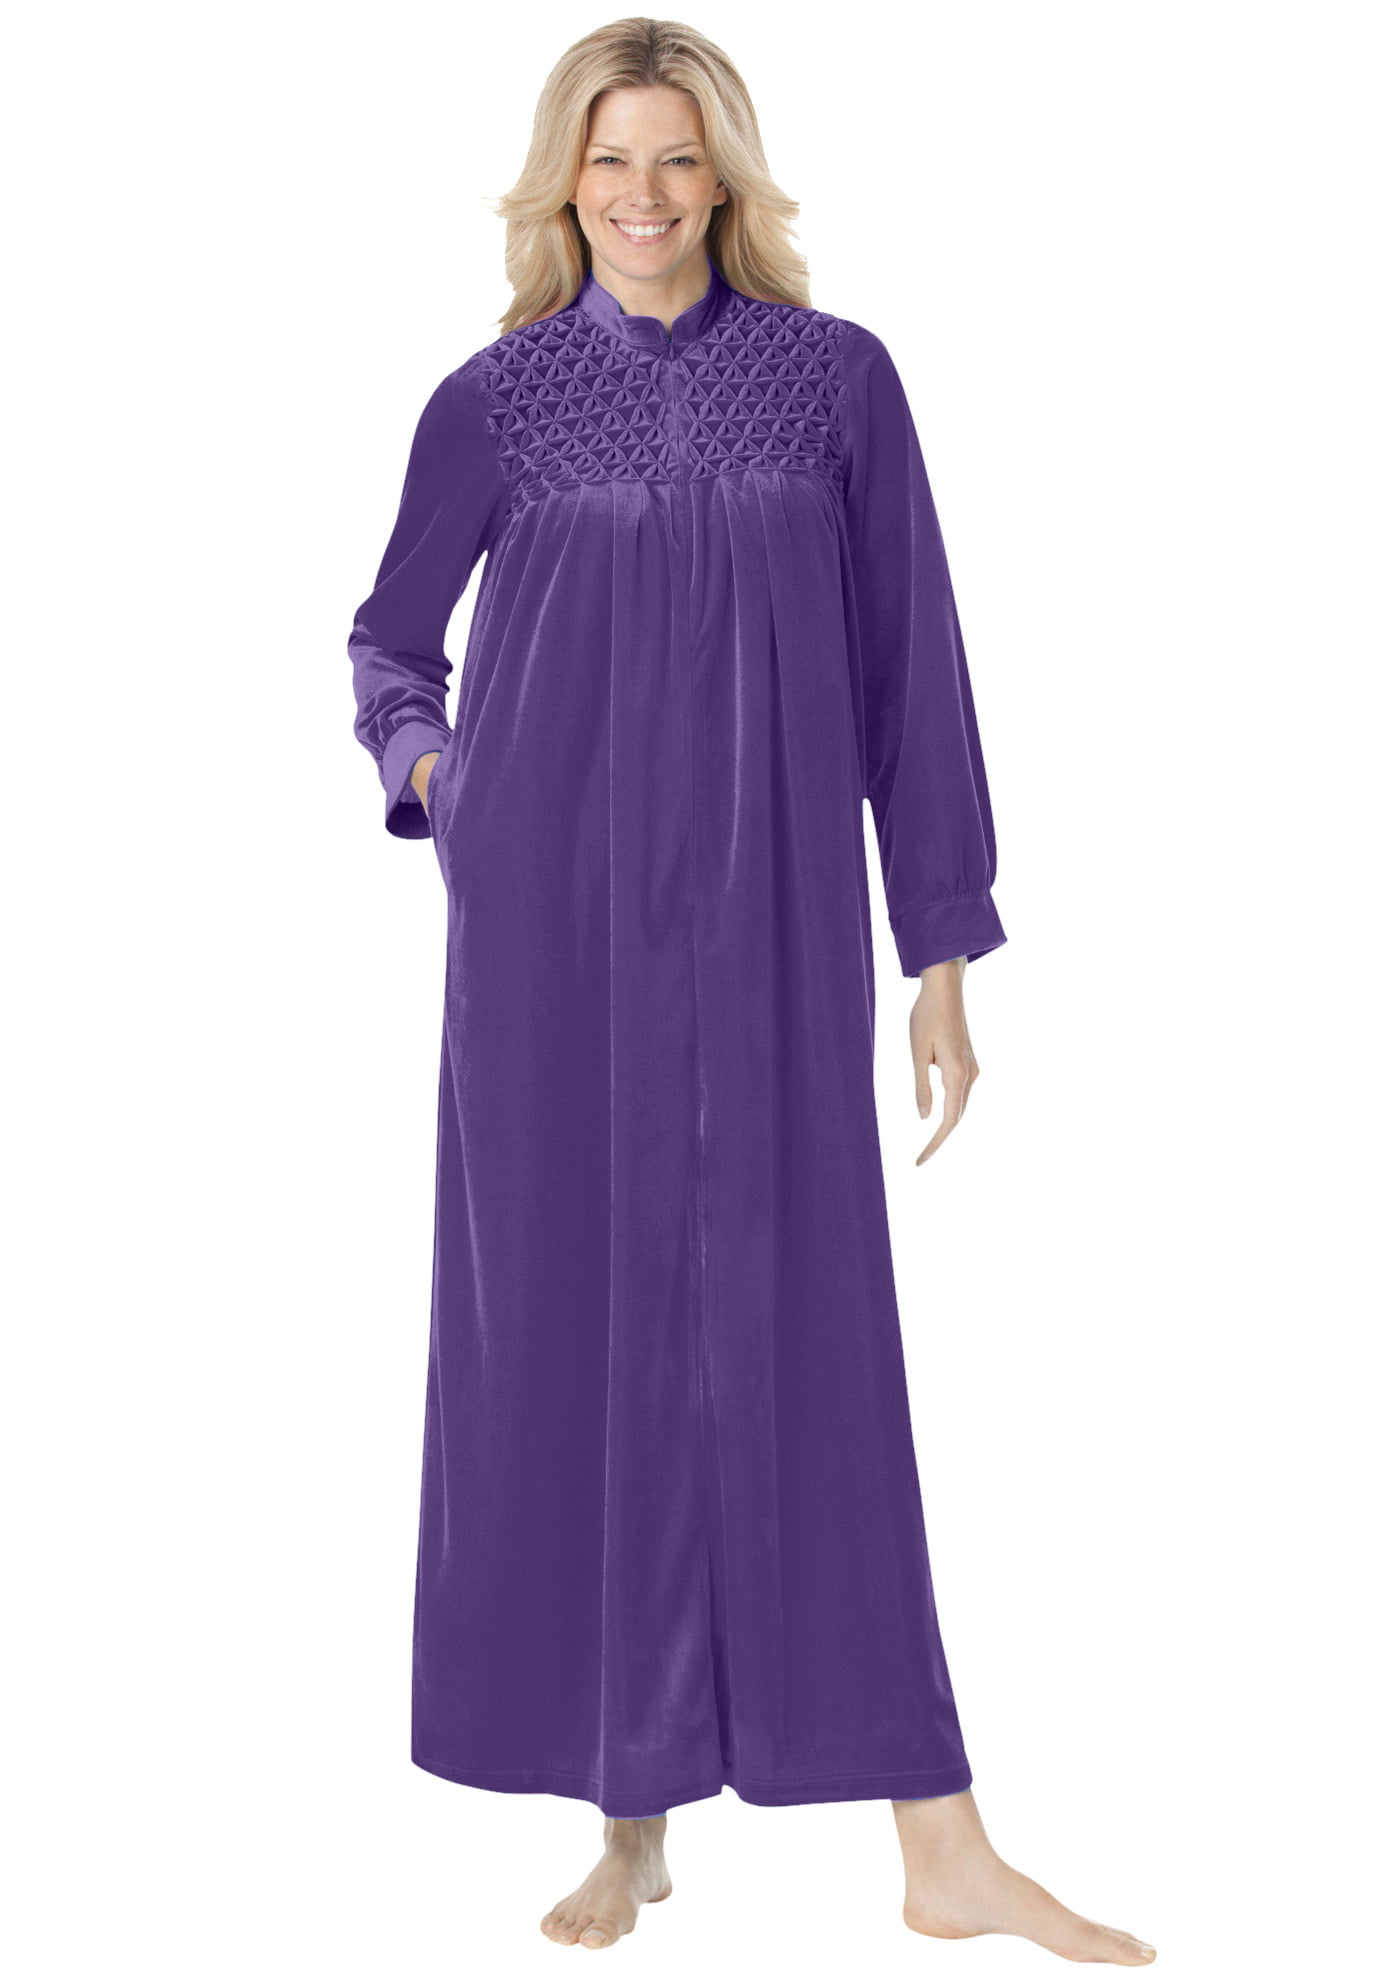 Only Necessities Necessities Women's Plus Size Smocked Velour Long Robe Robe 4X, Waterfall Blue - Walmart.com - Walmart.com